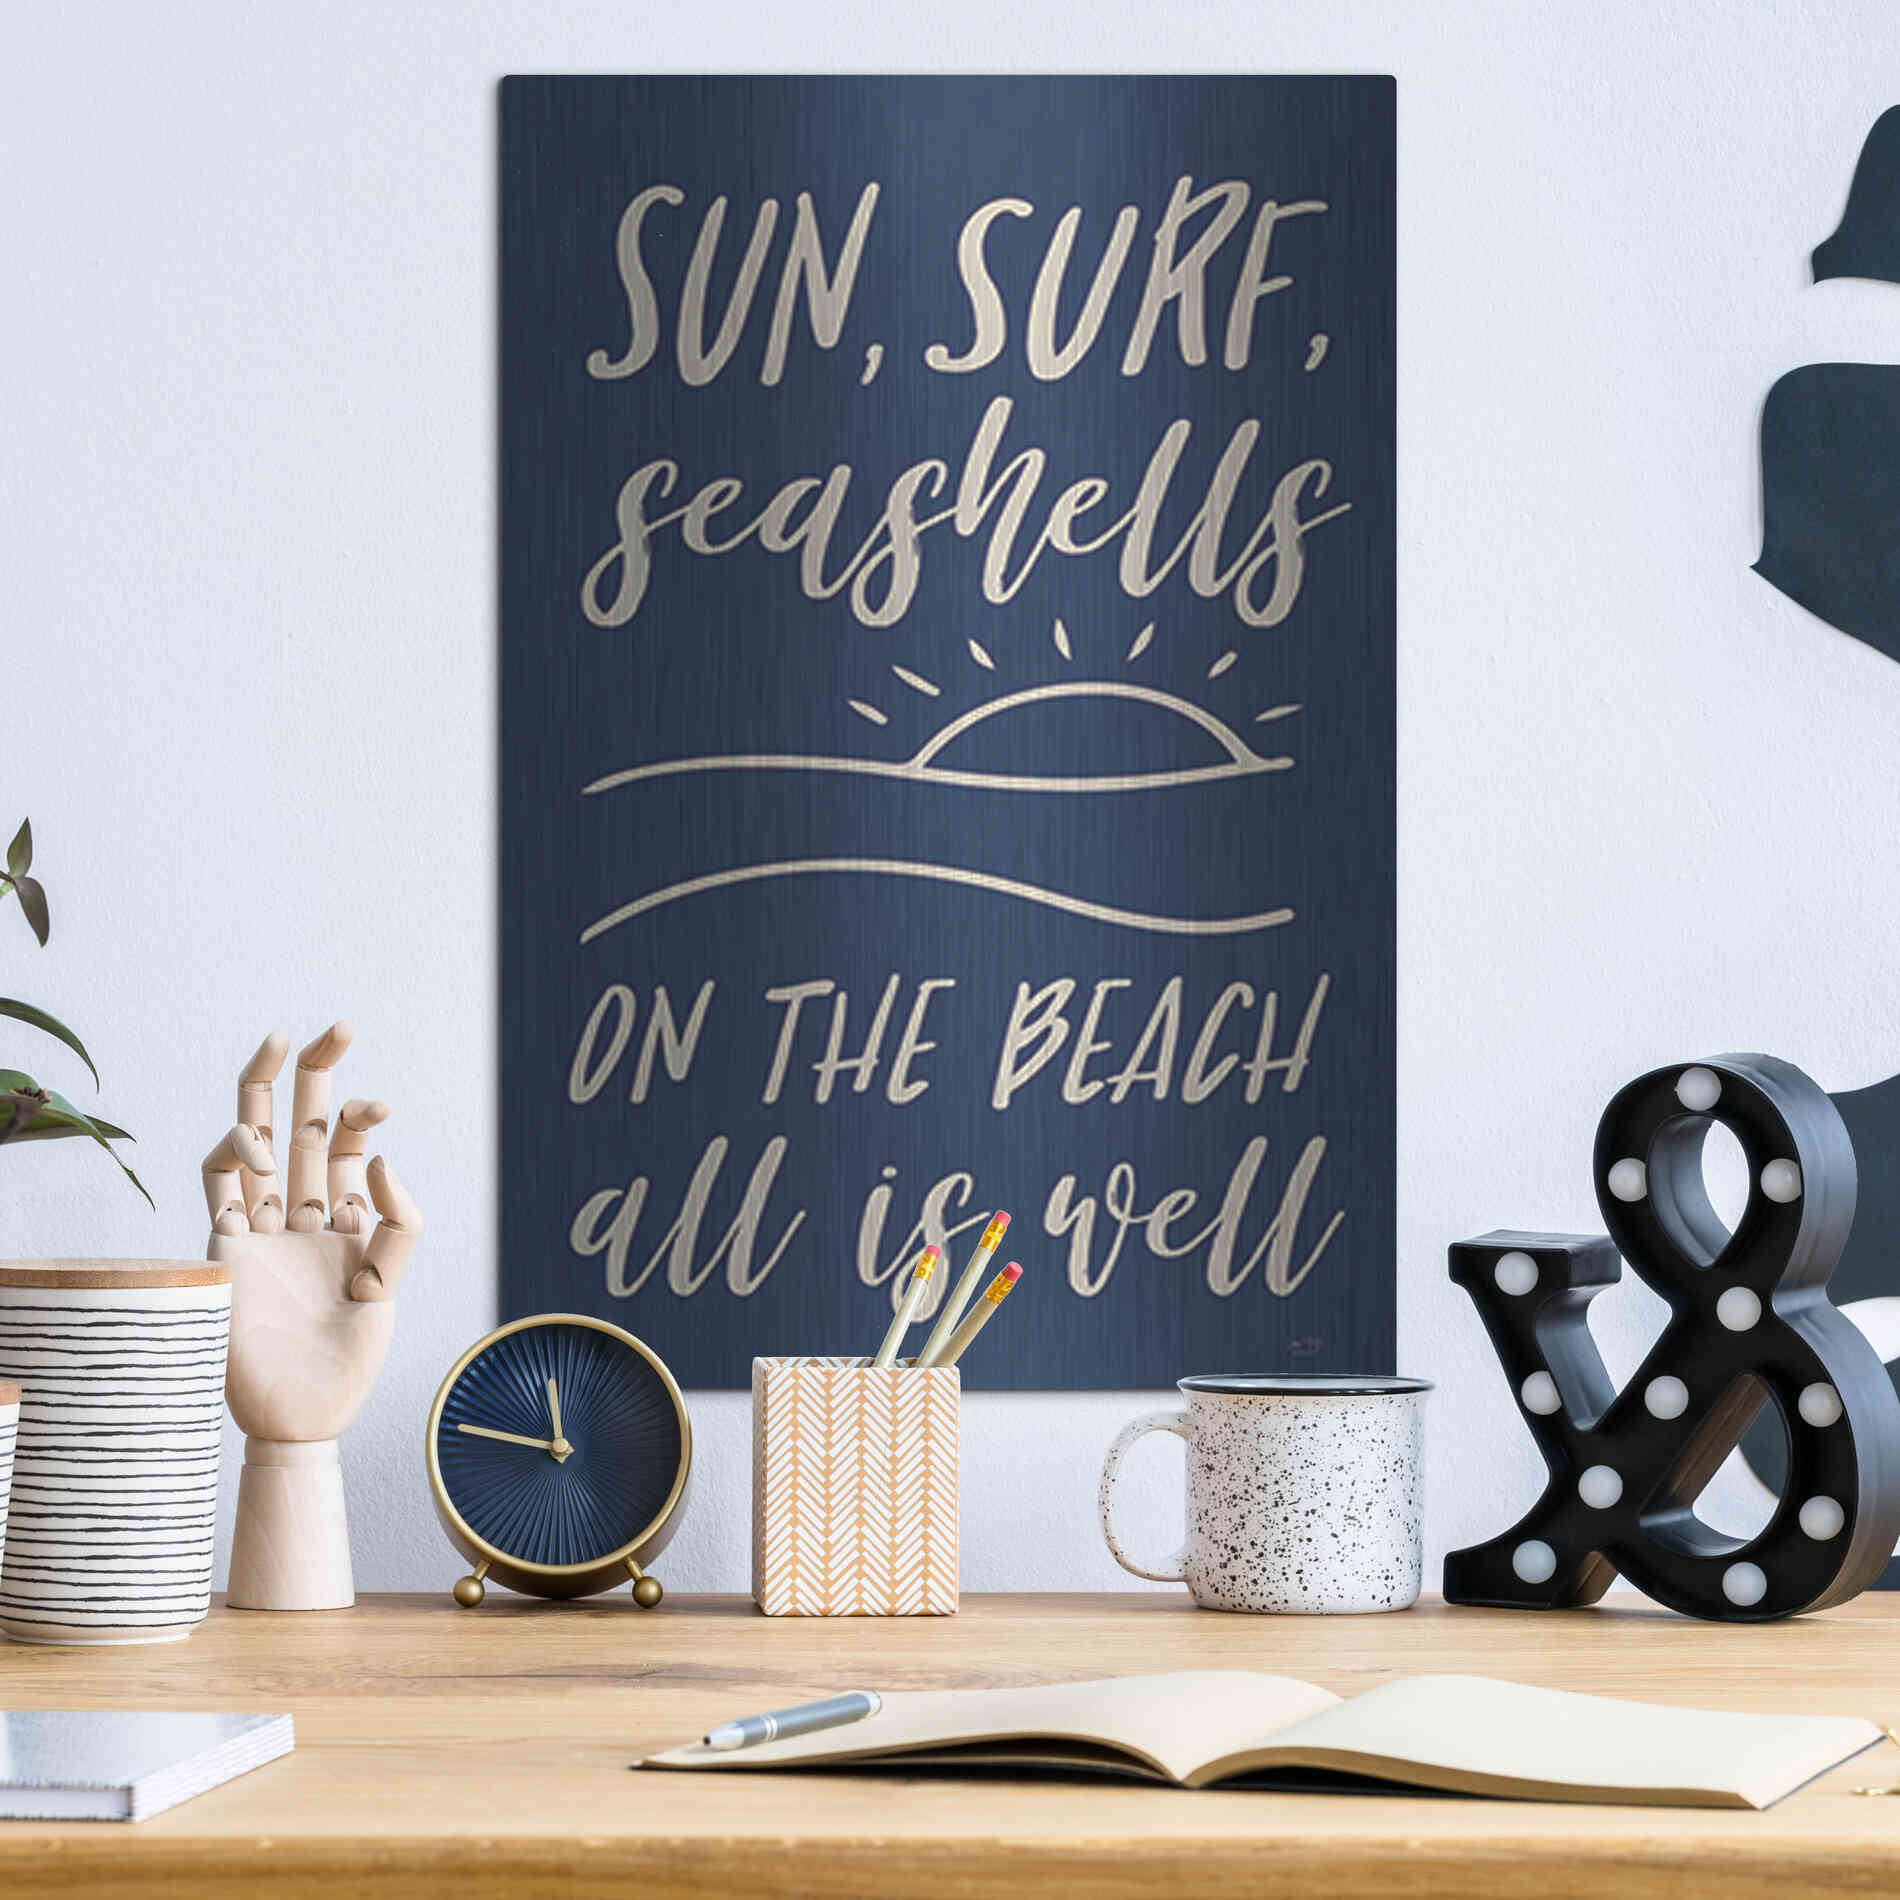 Luxe Metal Art 'Sun, Surf, Seashells' by Lux + Me Designs, Metal Wall Art,12x16